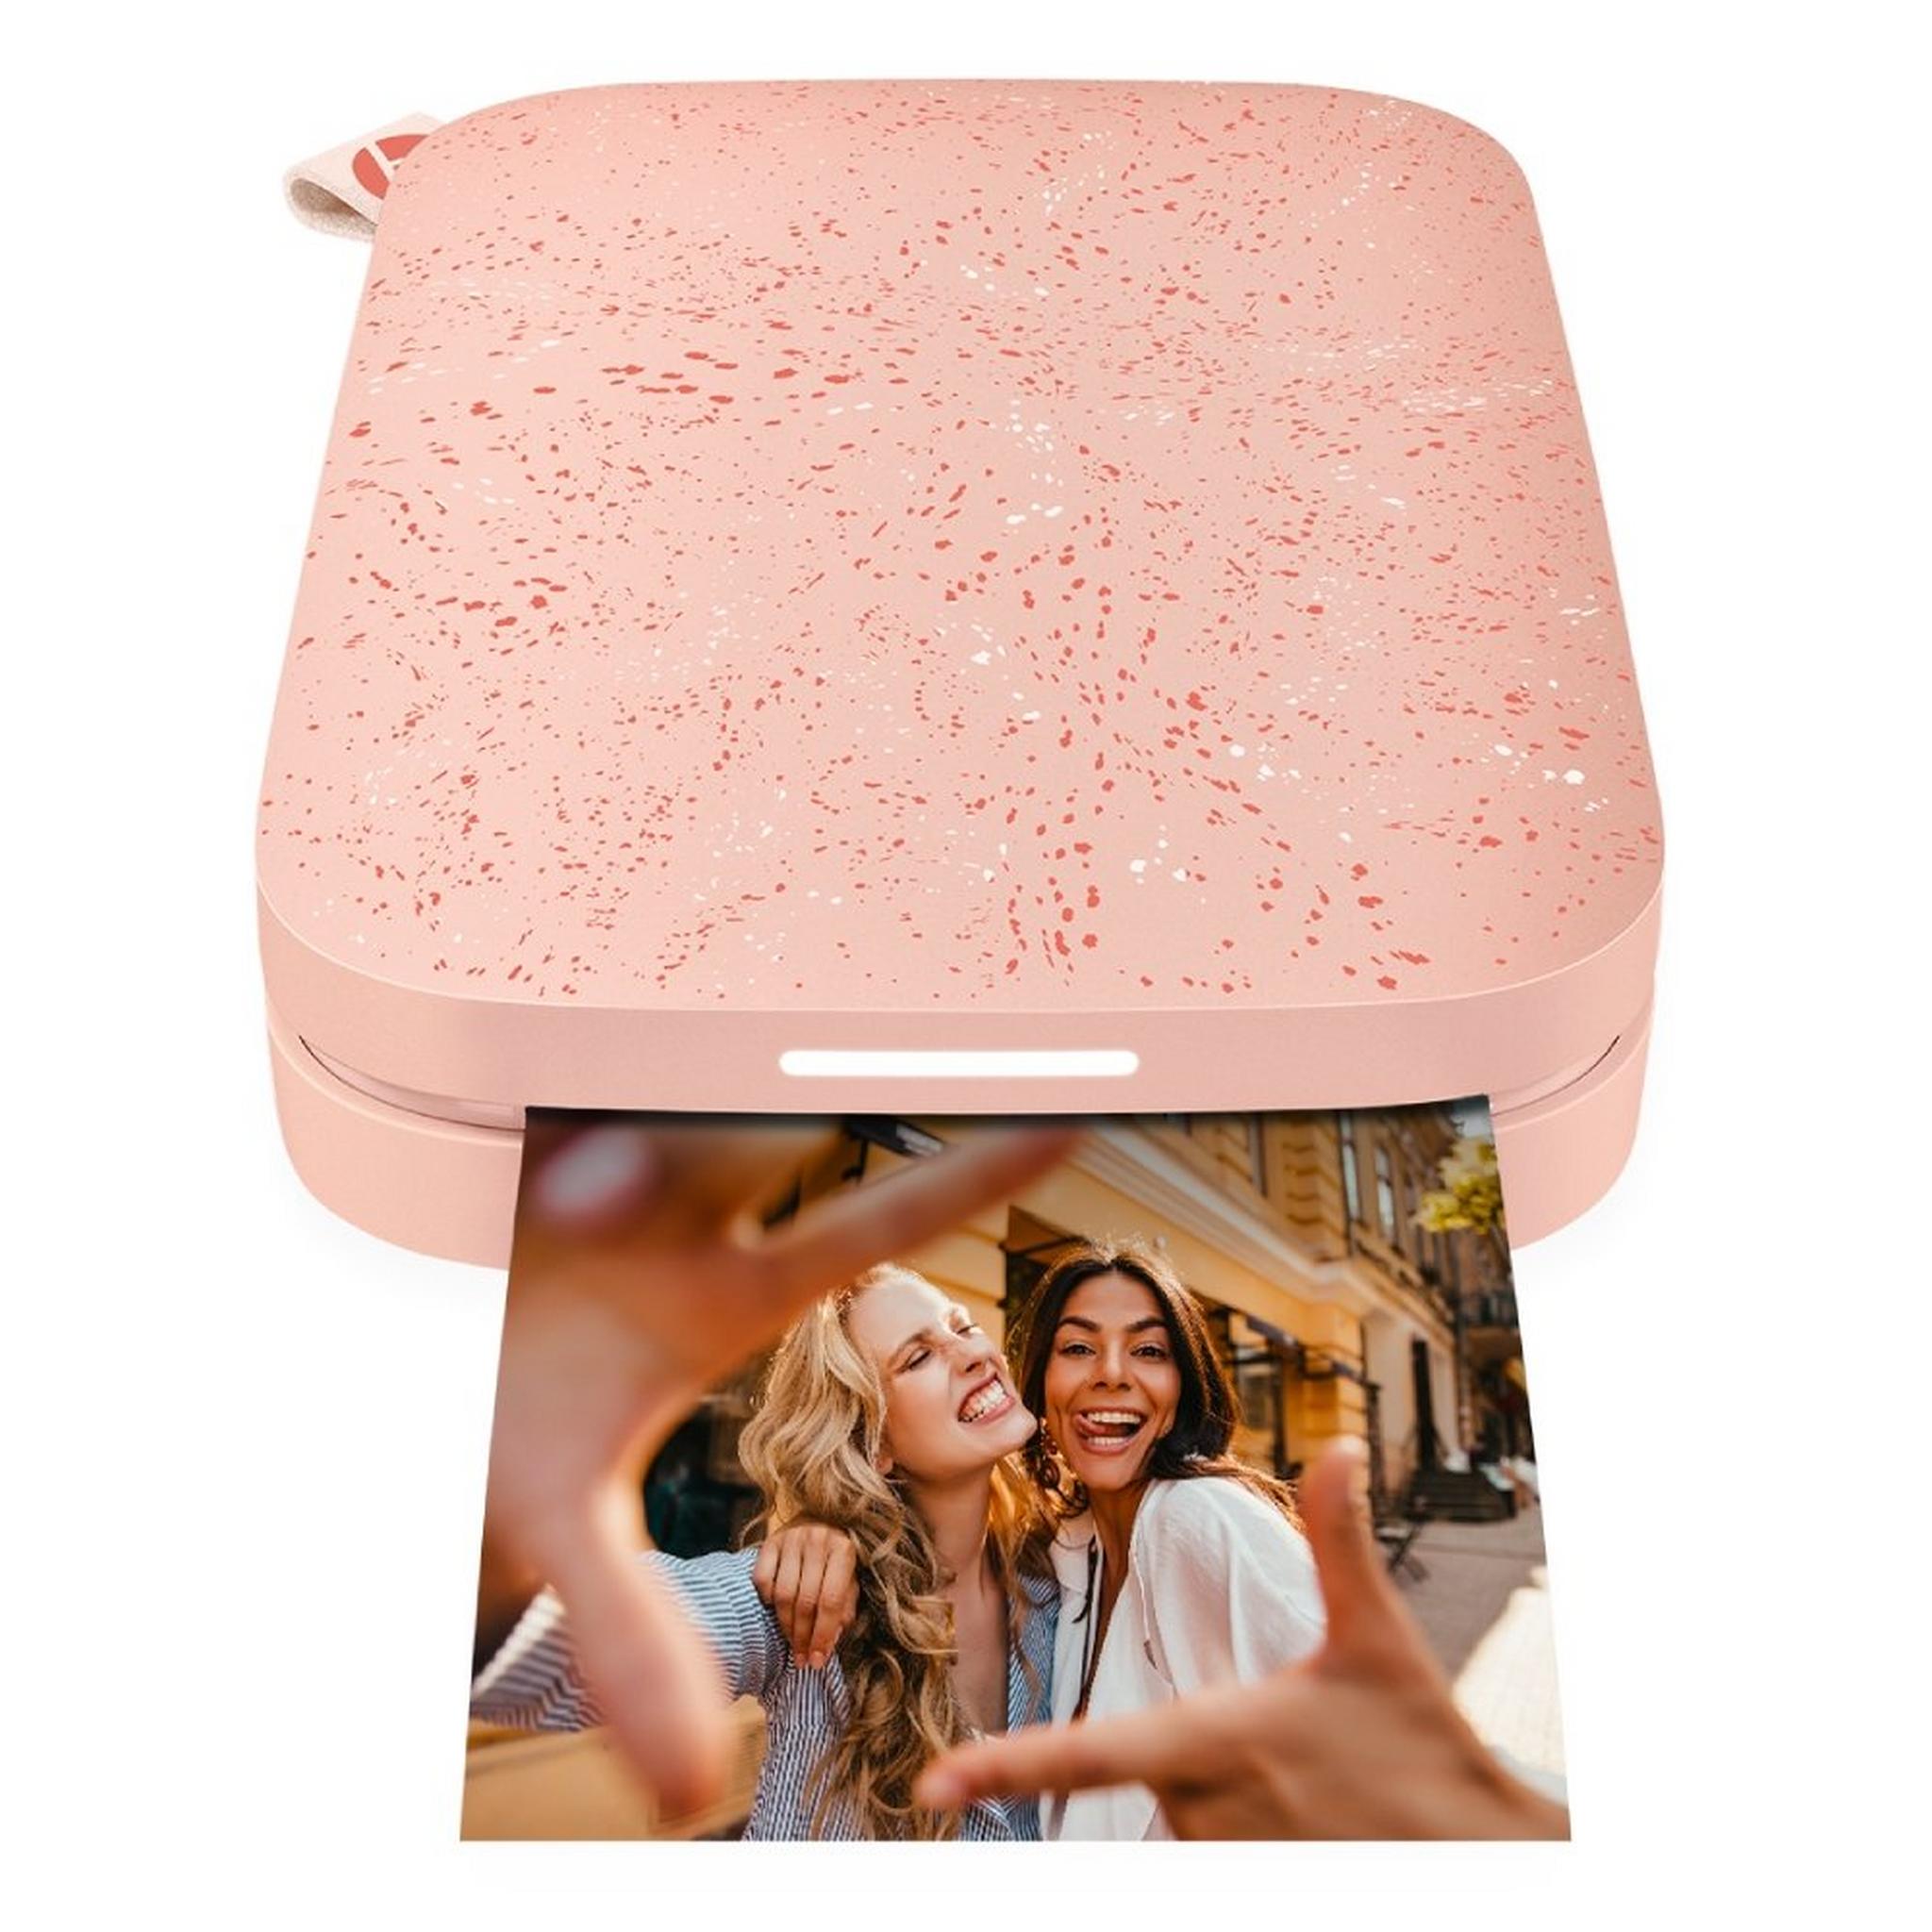 HP Sprocket Portable Instant Photo Printer – Pink